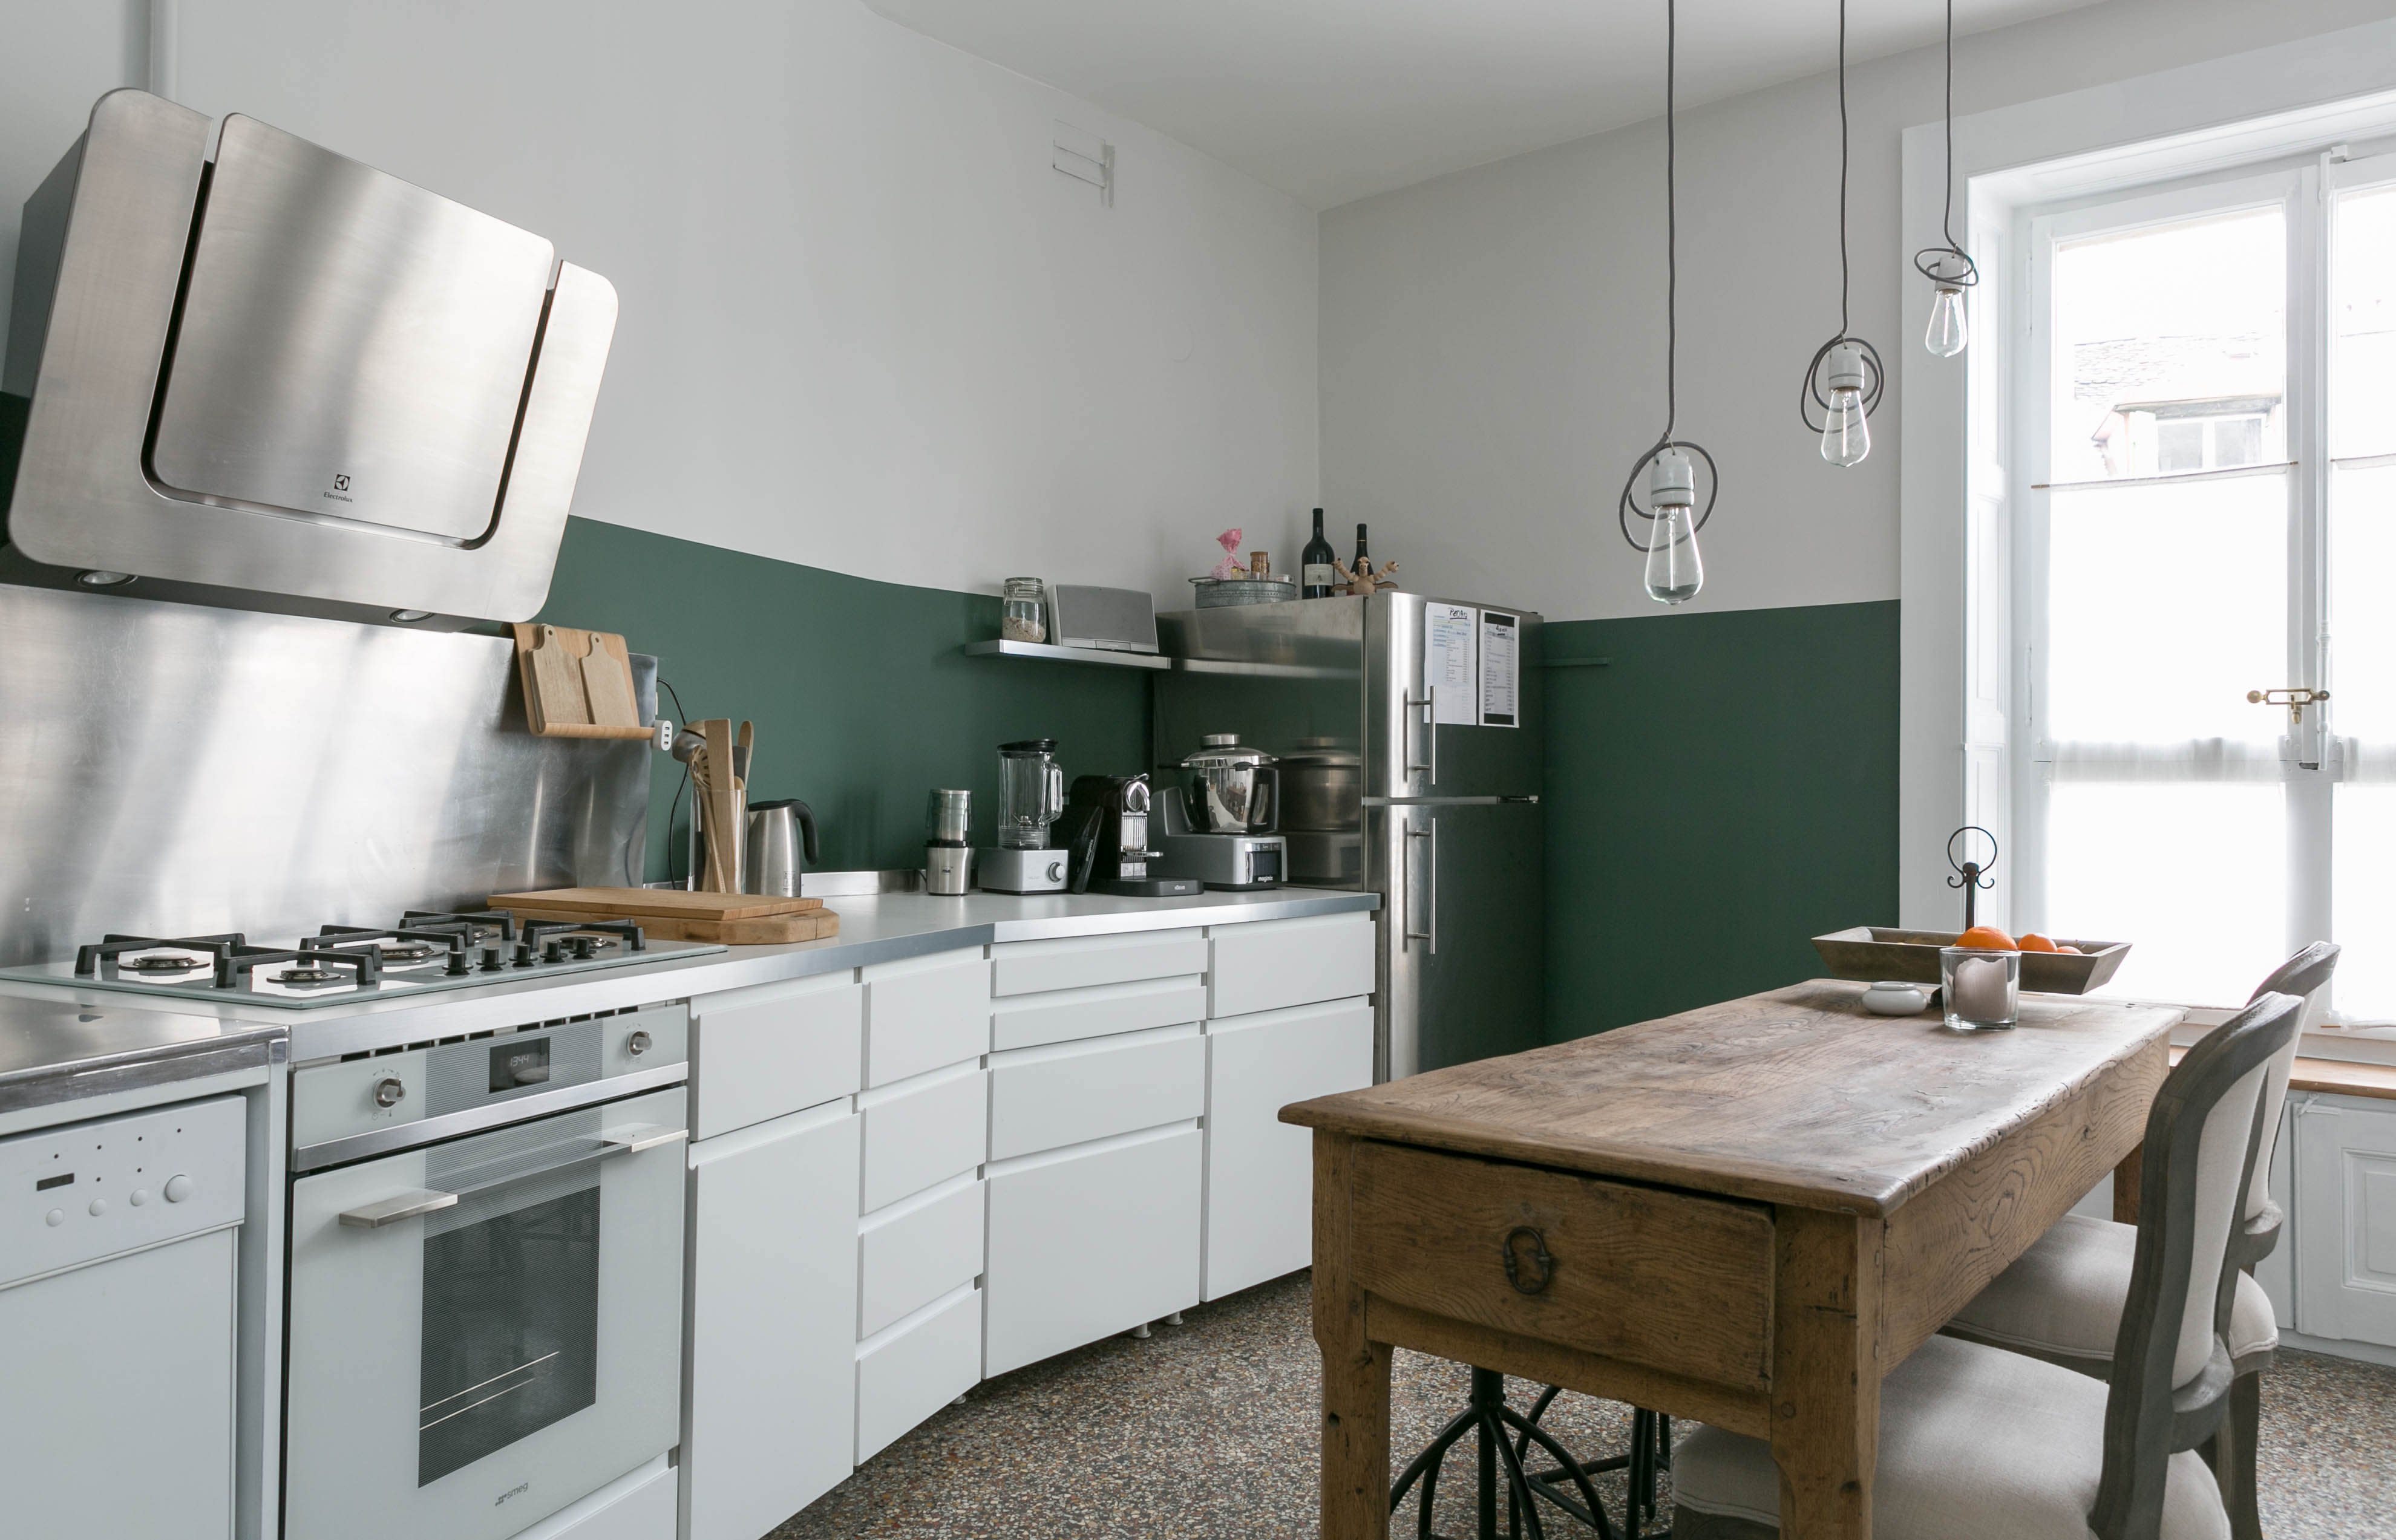  Kitchen  Backsplash  Tile Ideas Pictures Designs 